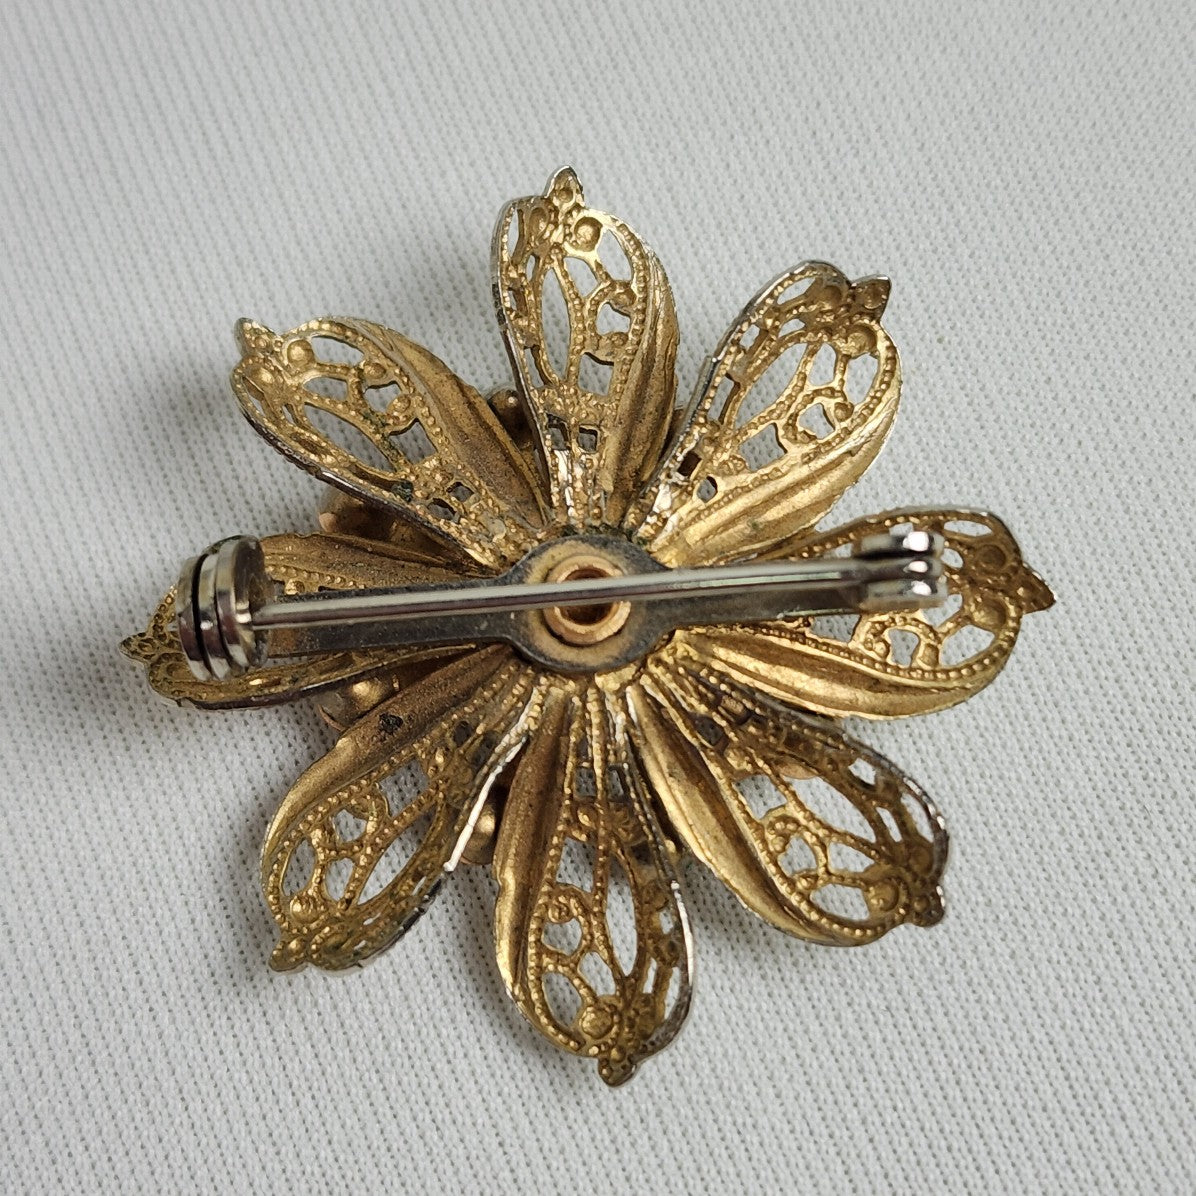 Vintage Crystal Flower Brooch Silver & Gold Tone